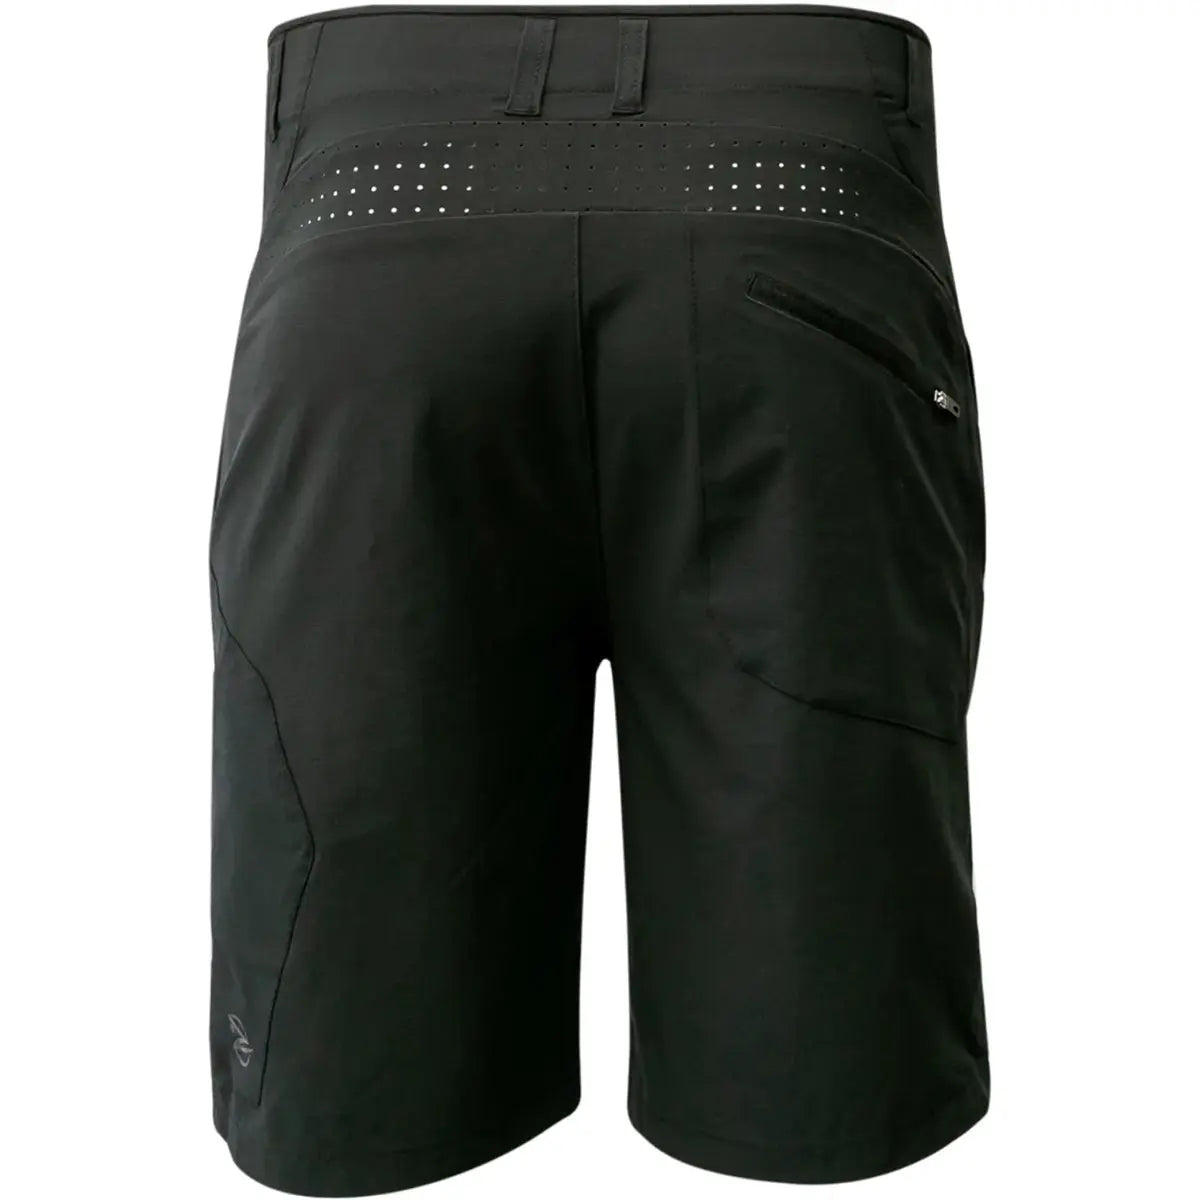 Gillz Extreme Bonded 9" Shorts - Black Abyss Gillz